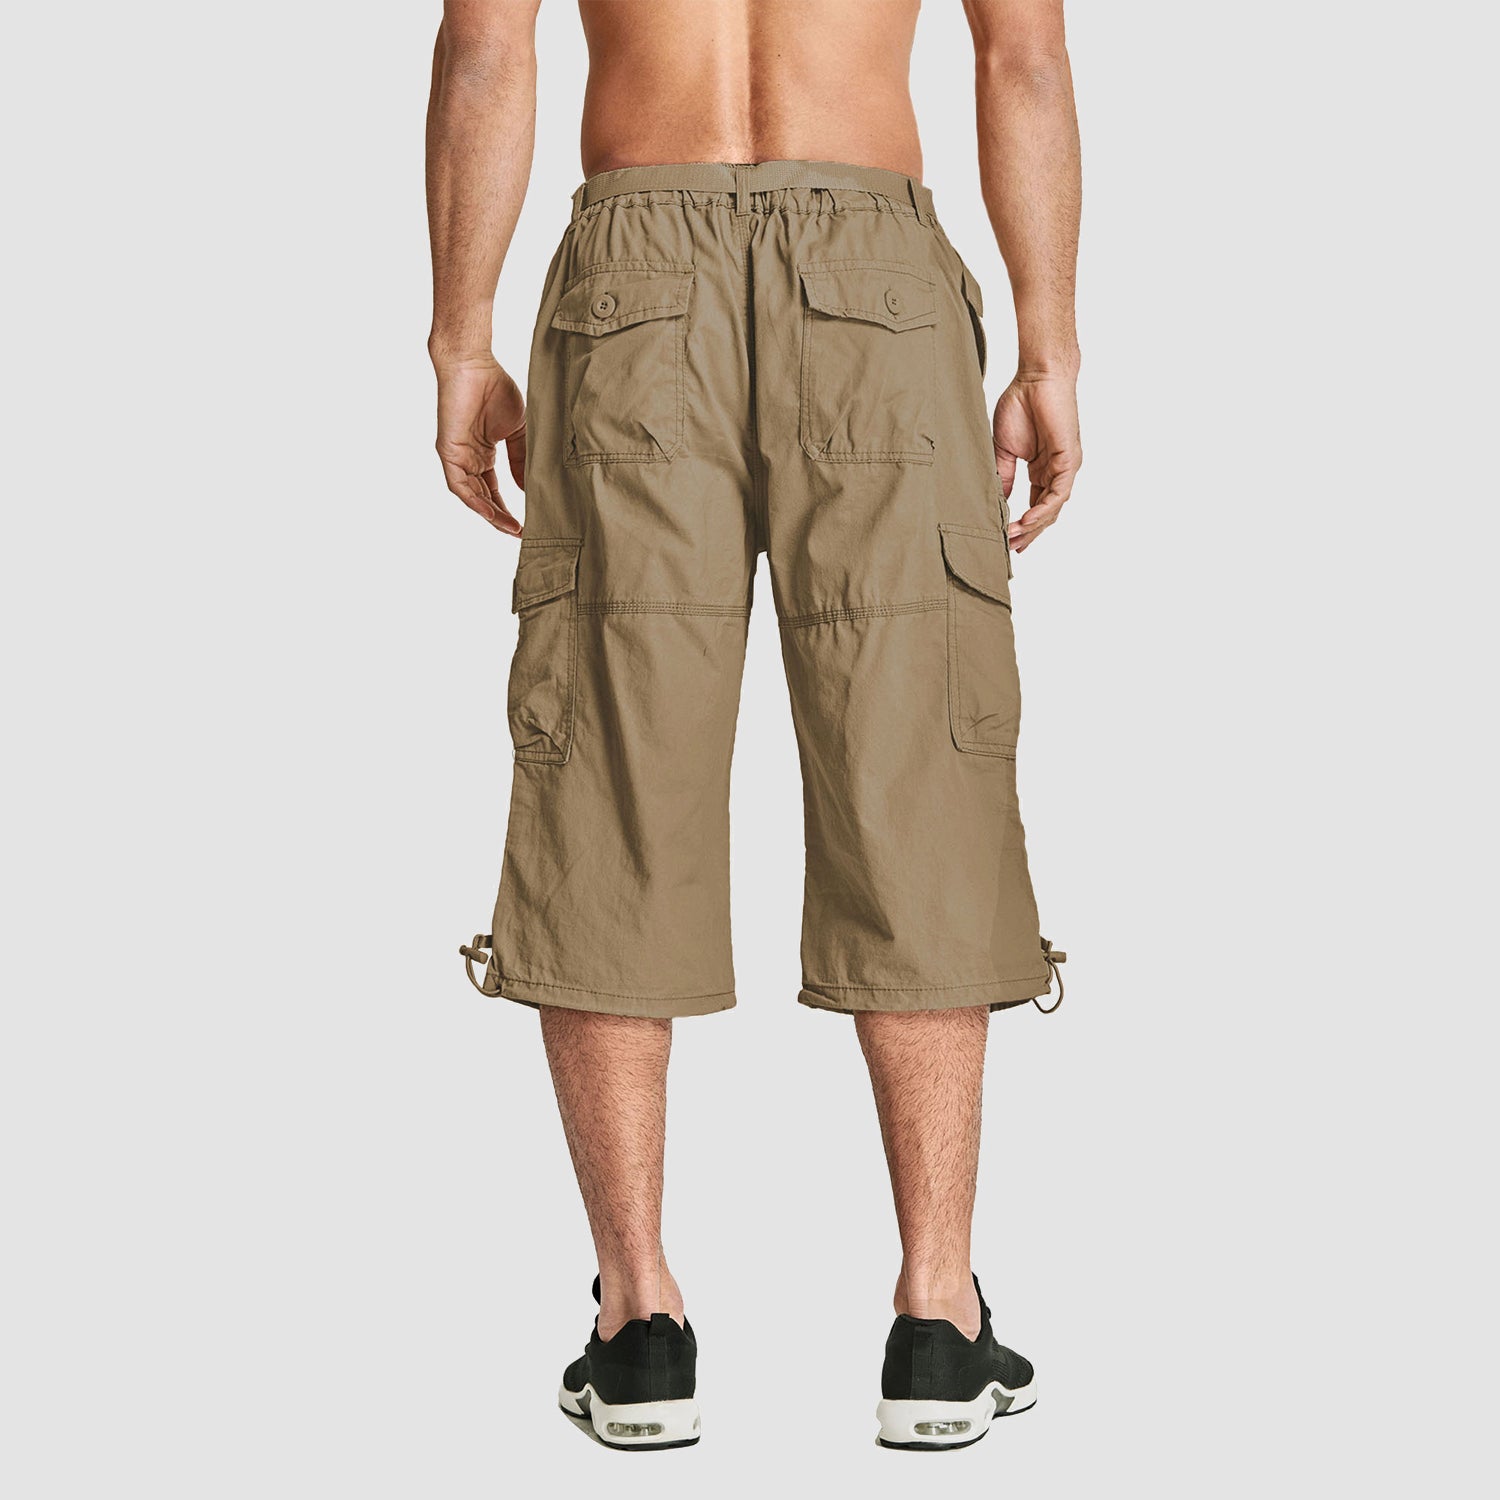 TACVASEN Capris Pants for Men Cargo Shorts 3/4 Shorts Elastic Waist Shorts  Baggy Shorts Multi-Pocket Shorts Work Shorts